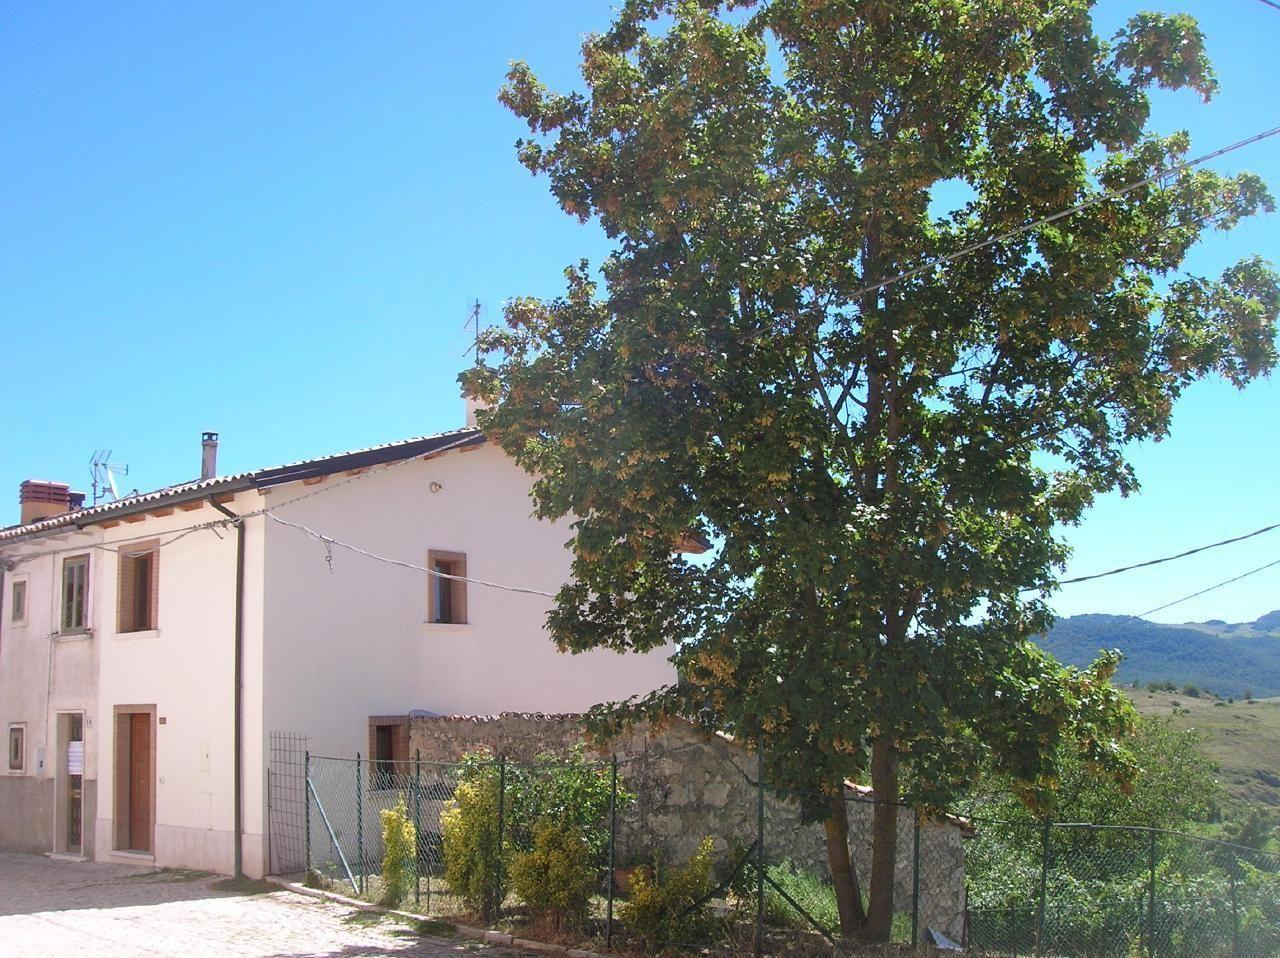 Ferienhaus in Roccacinquemiglia mit Grill   Abruzzen